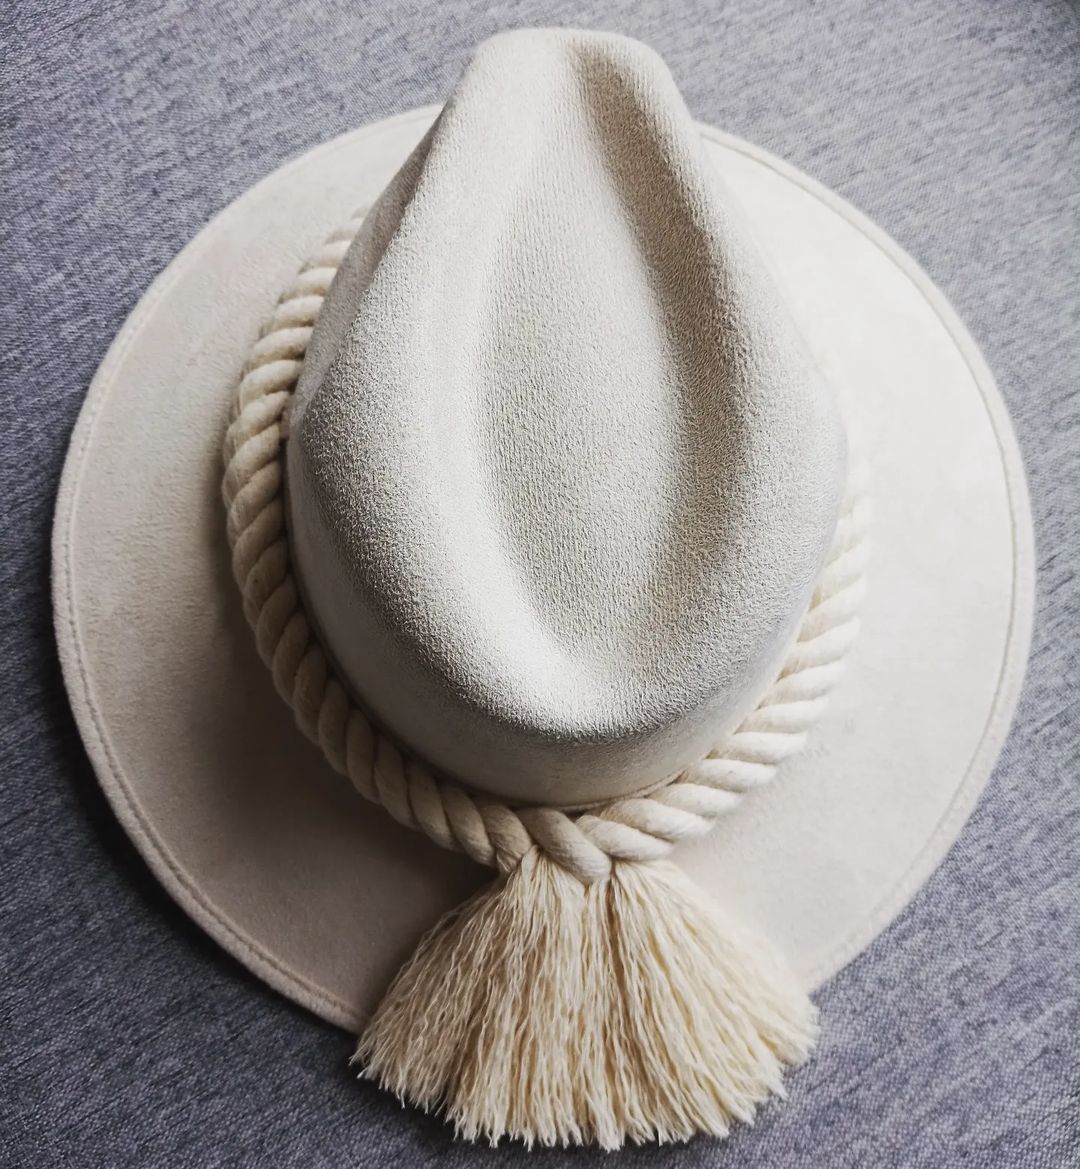 Sombrero de gamuza color arena cordón de algodón crudo.